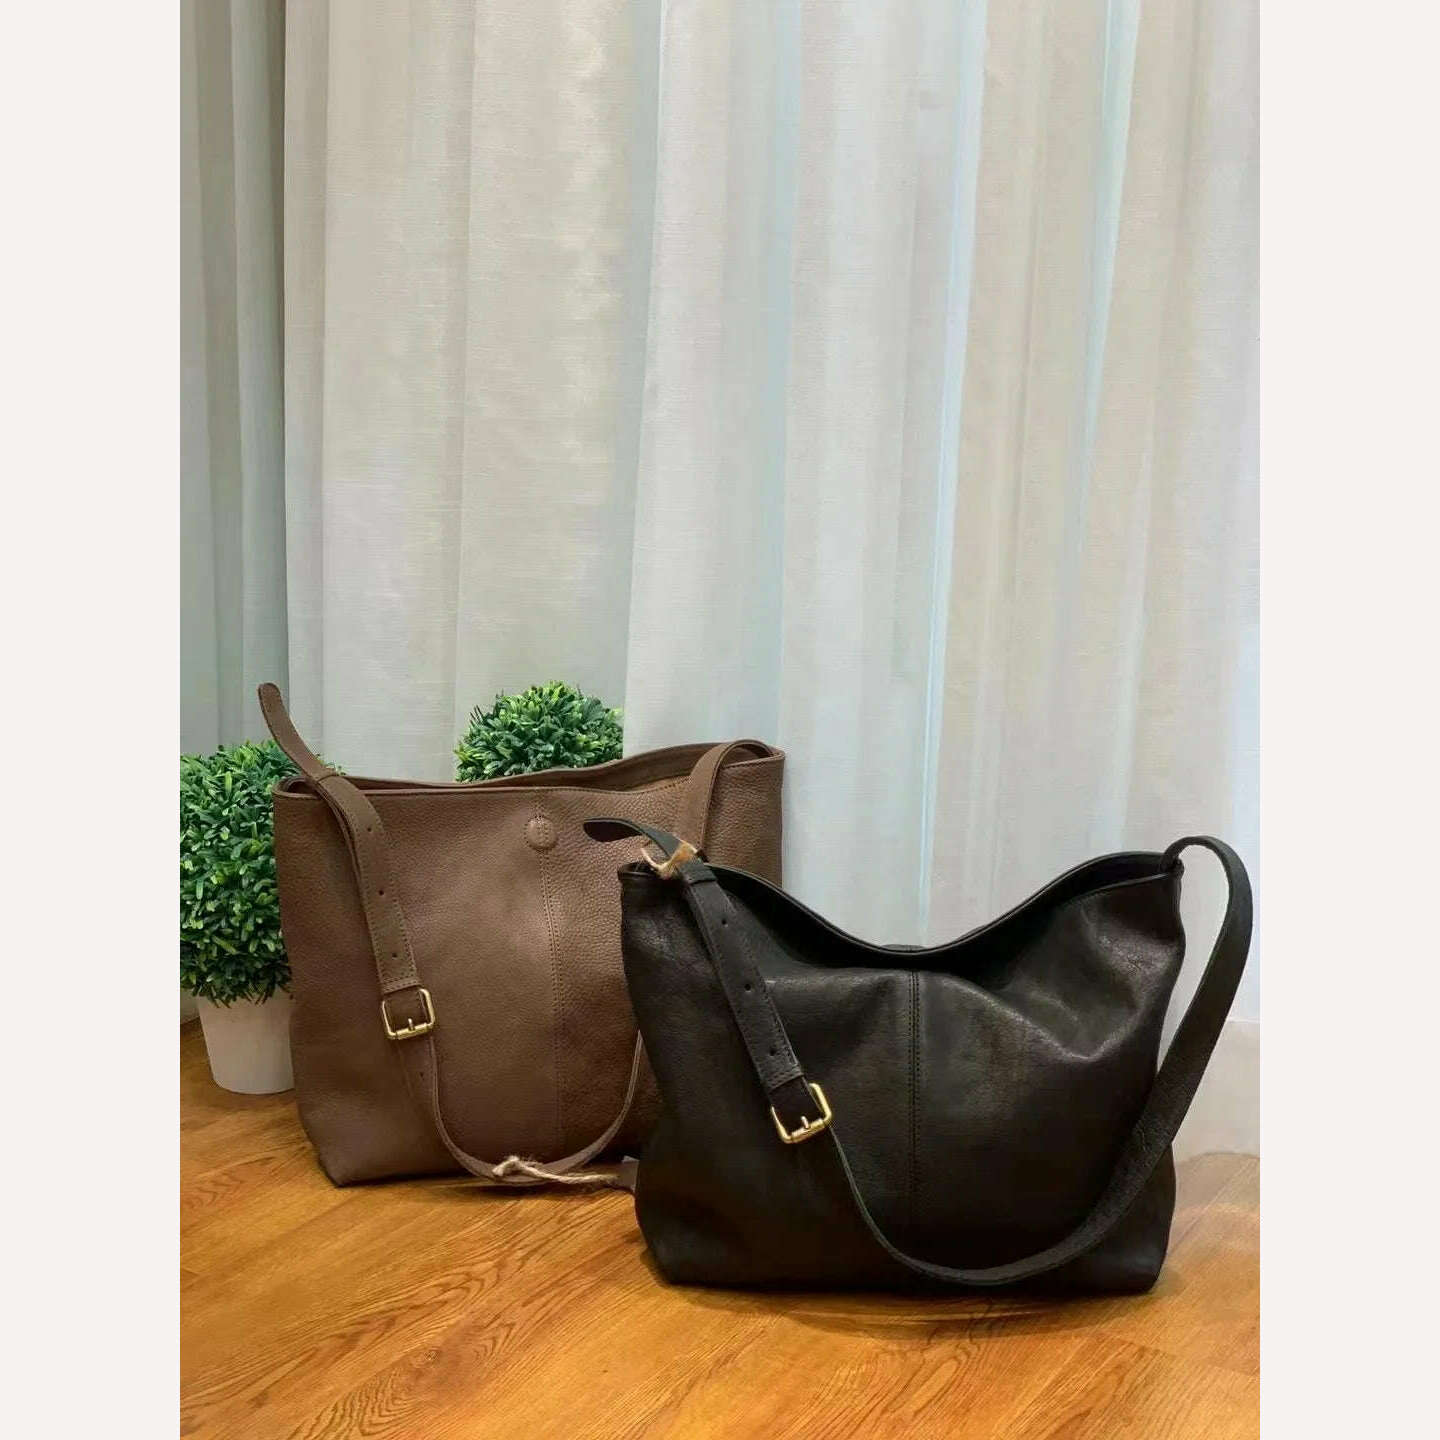 KIMLUD, ANGENGRUI Genuine Leather Handbag Luxury Cowhide Casual Tote  Natural Leather Bucket Shopper Daily Bag Big Purse Shoulder Bag, KIMLUD Women's Clothes